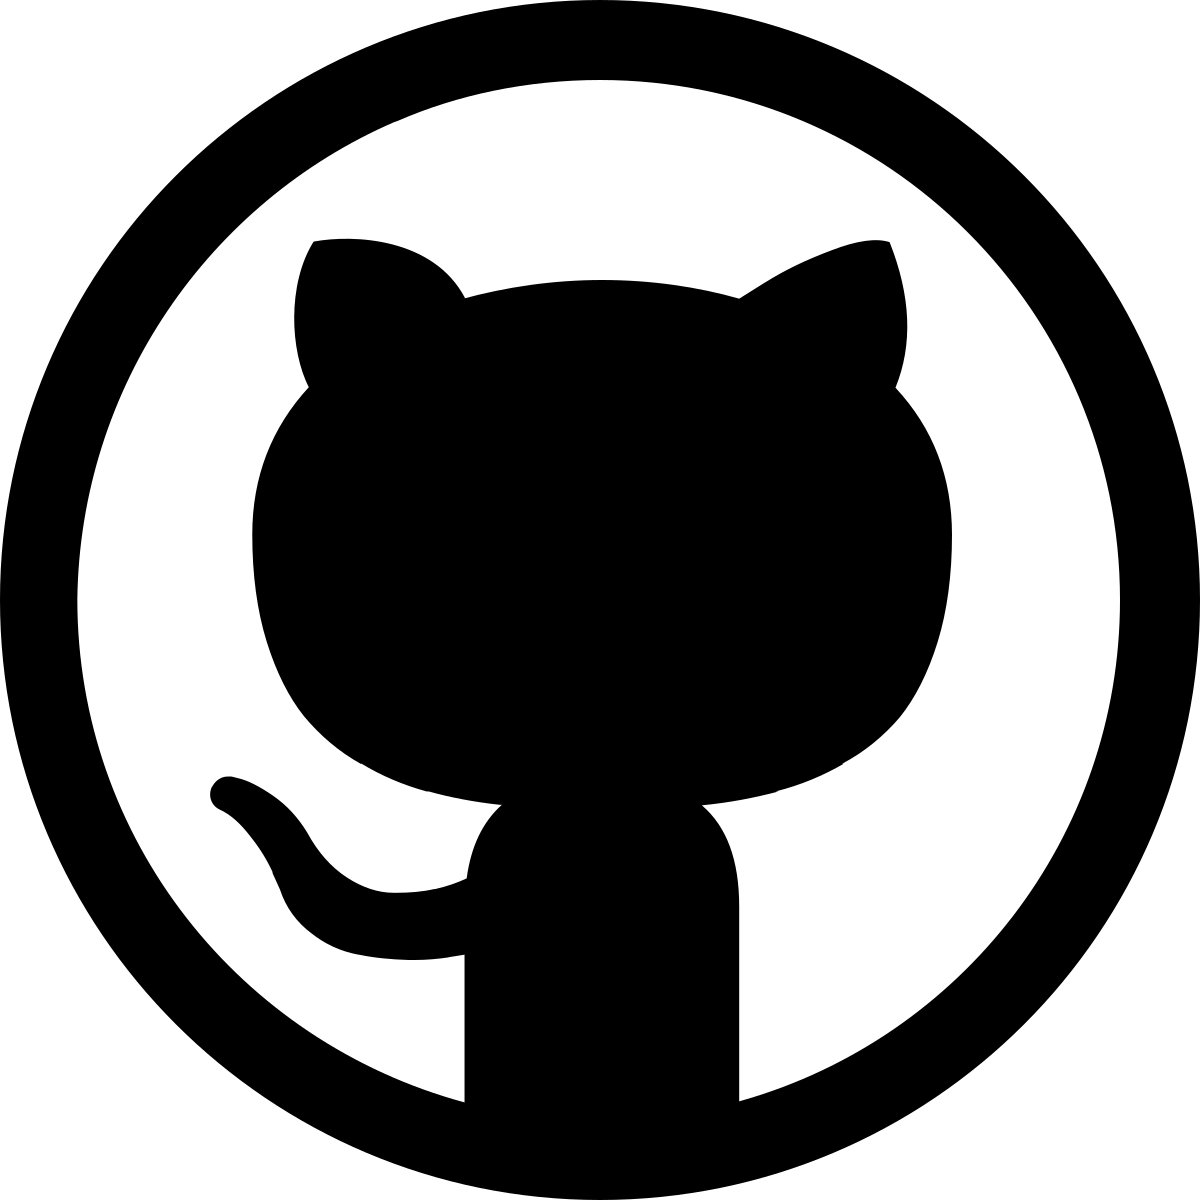 Github emoji. GITHUB логотип. Иконка гитхаб. Аватар для гитхаб. Стикеры GITHUB.